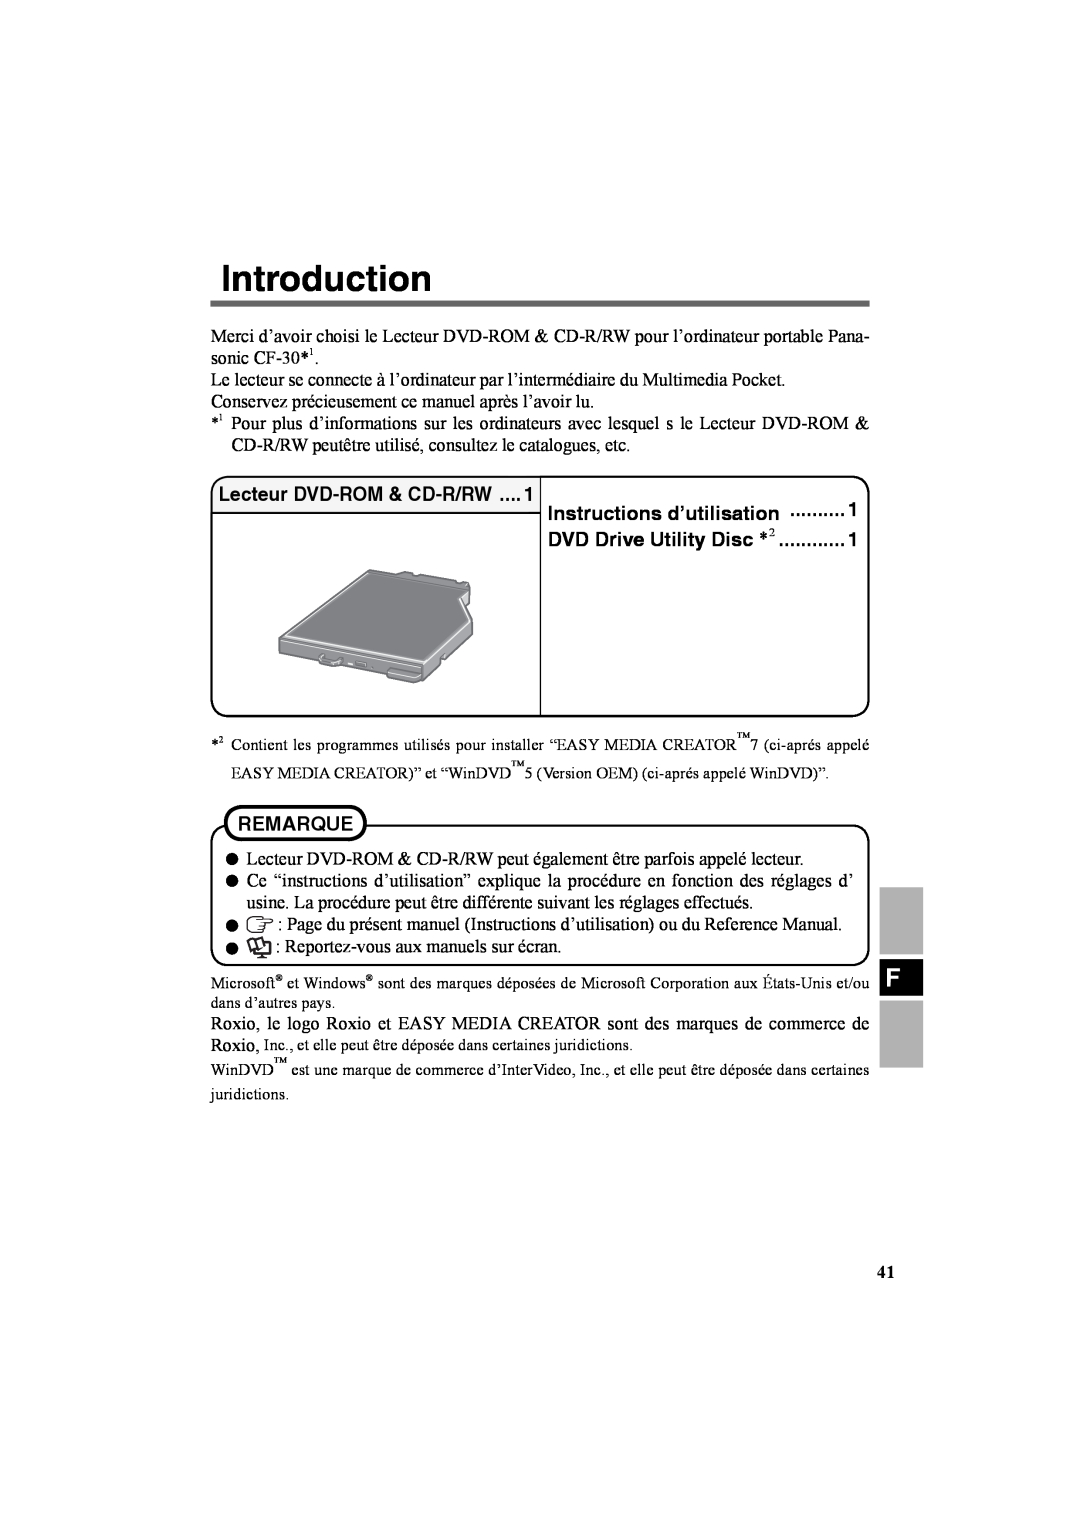 Panasonic CF-VDR301U Instructions d’utilisation, DVD Drive Utility Disc *2, Remarque, Lecteur DVD-ROM & CD-R/RW 